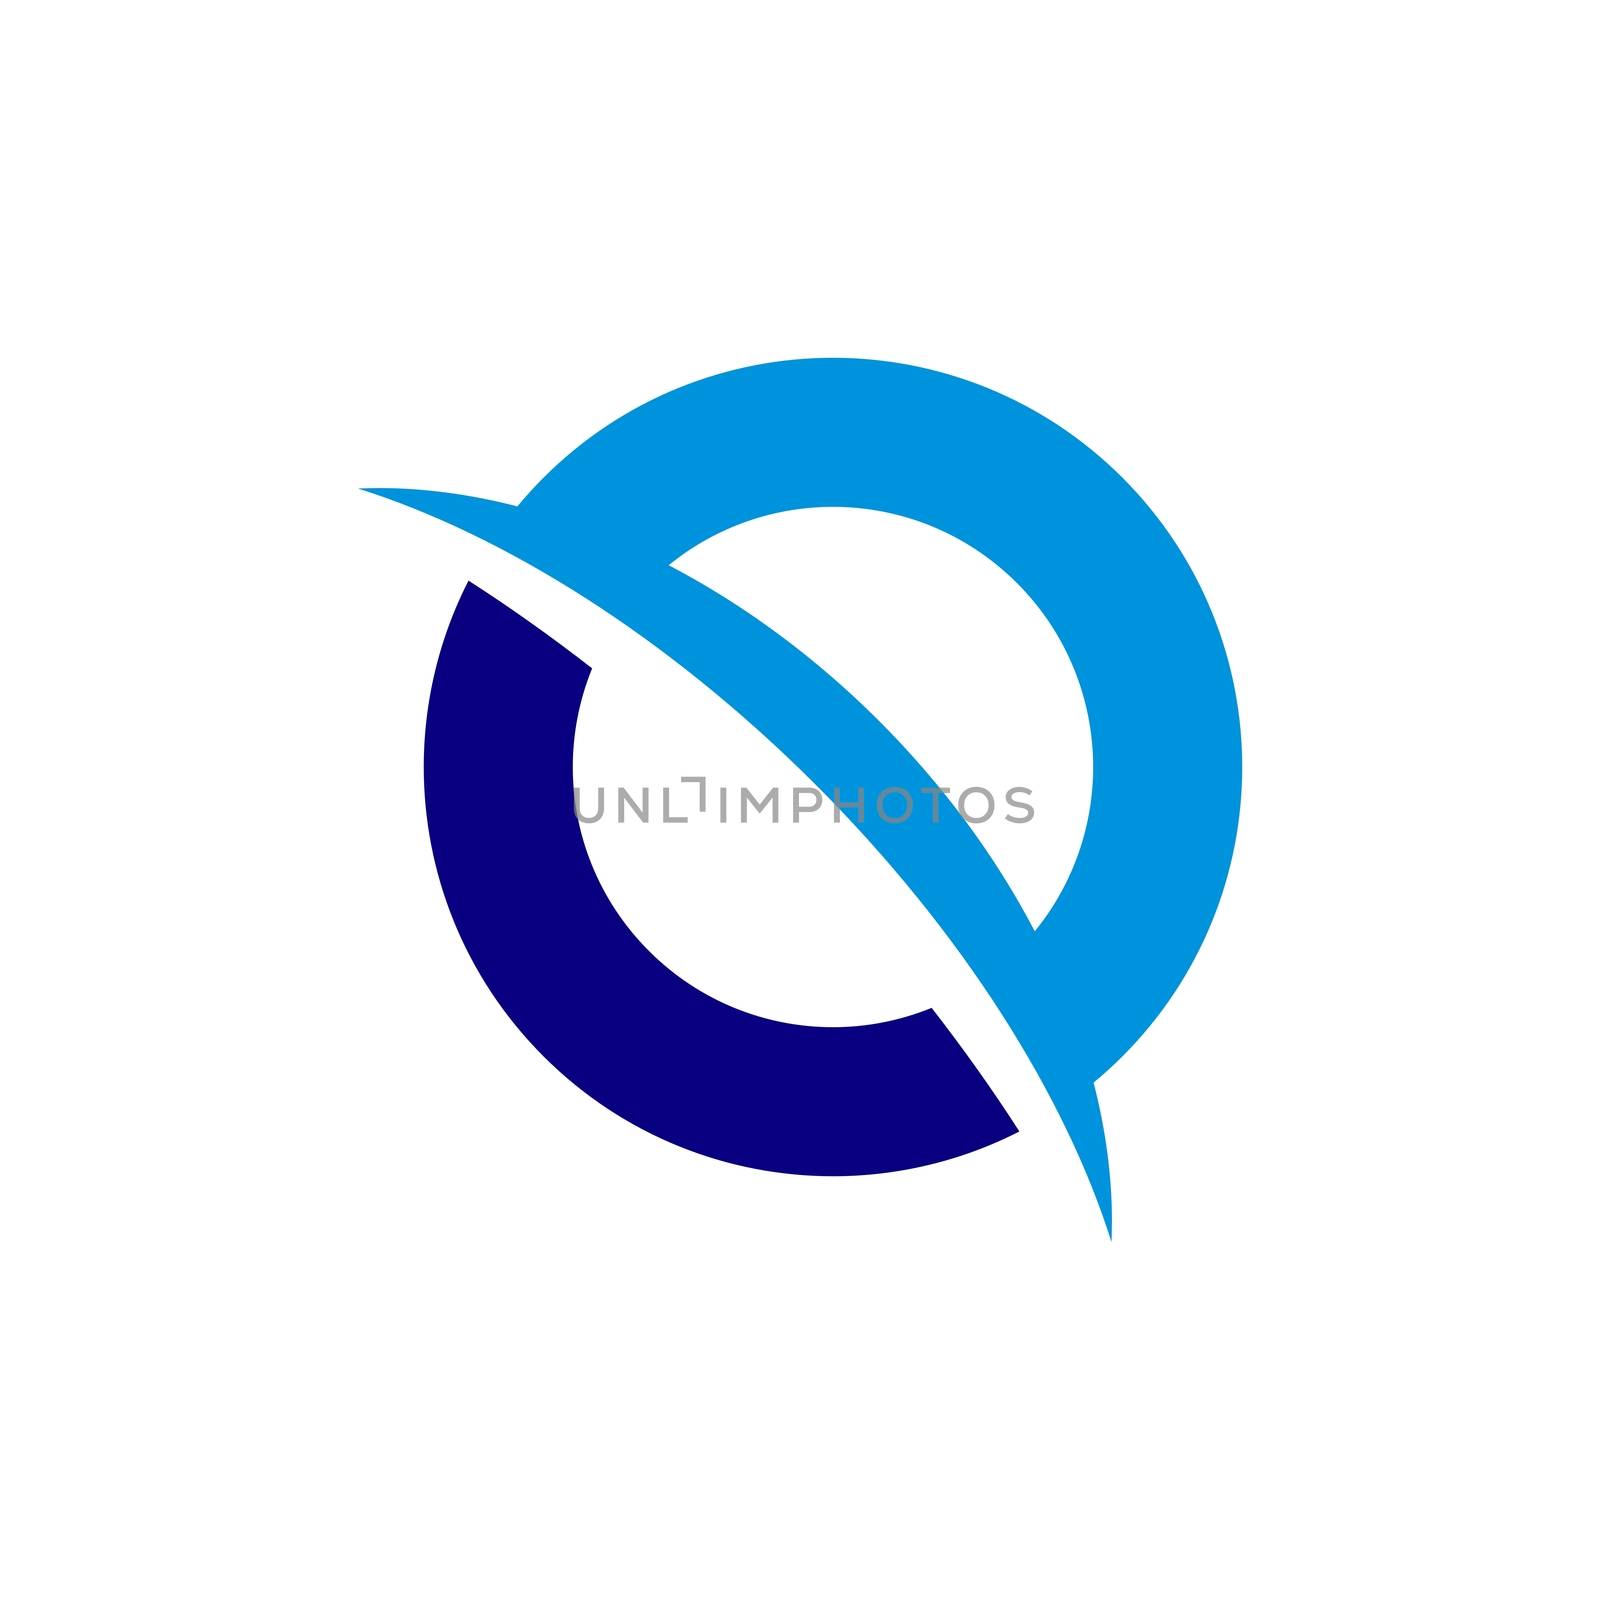 O Letter Shield Logo Template Illustration Design. Vector EPS 10.